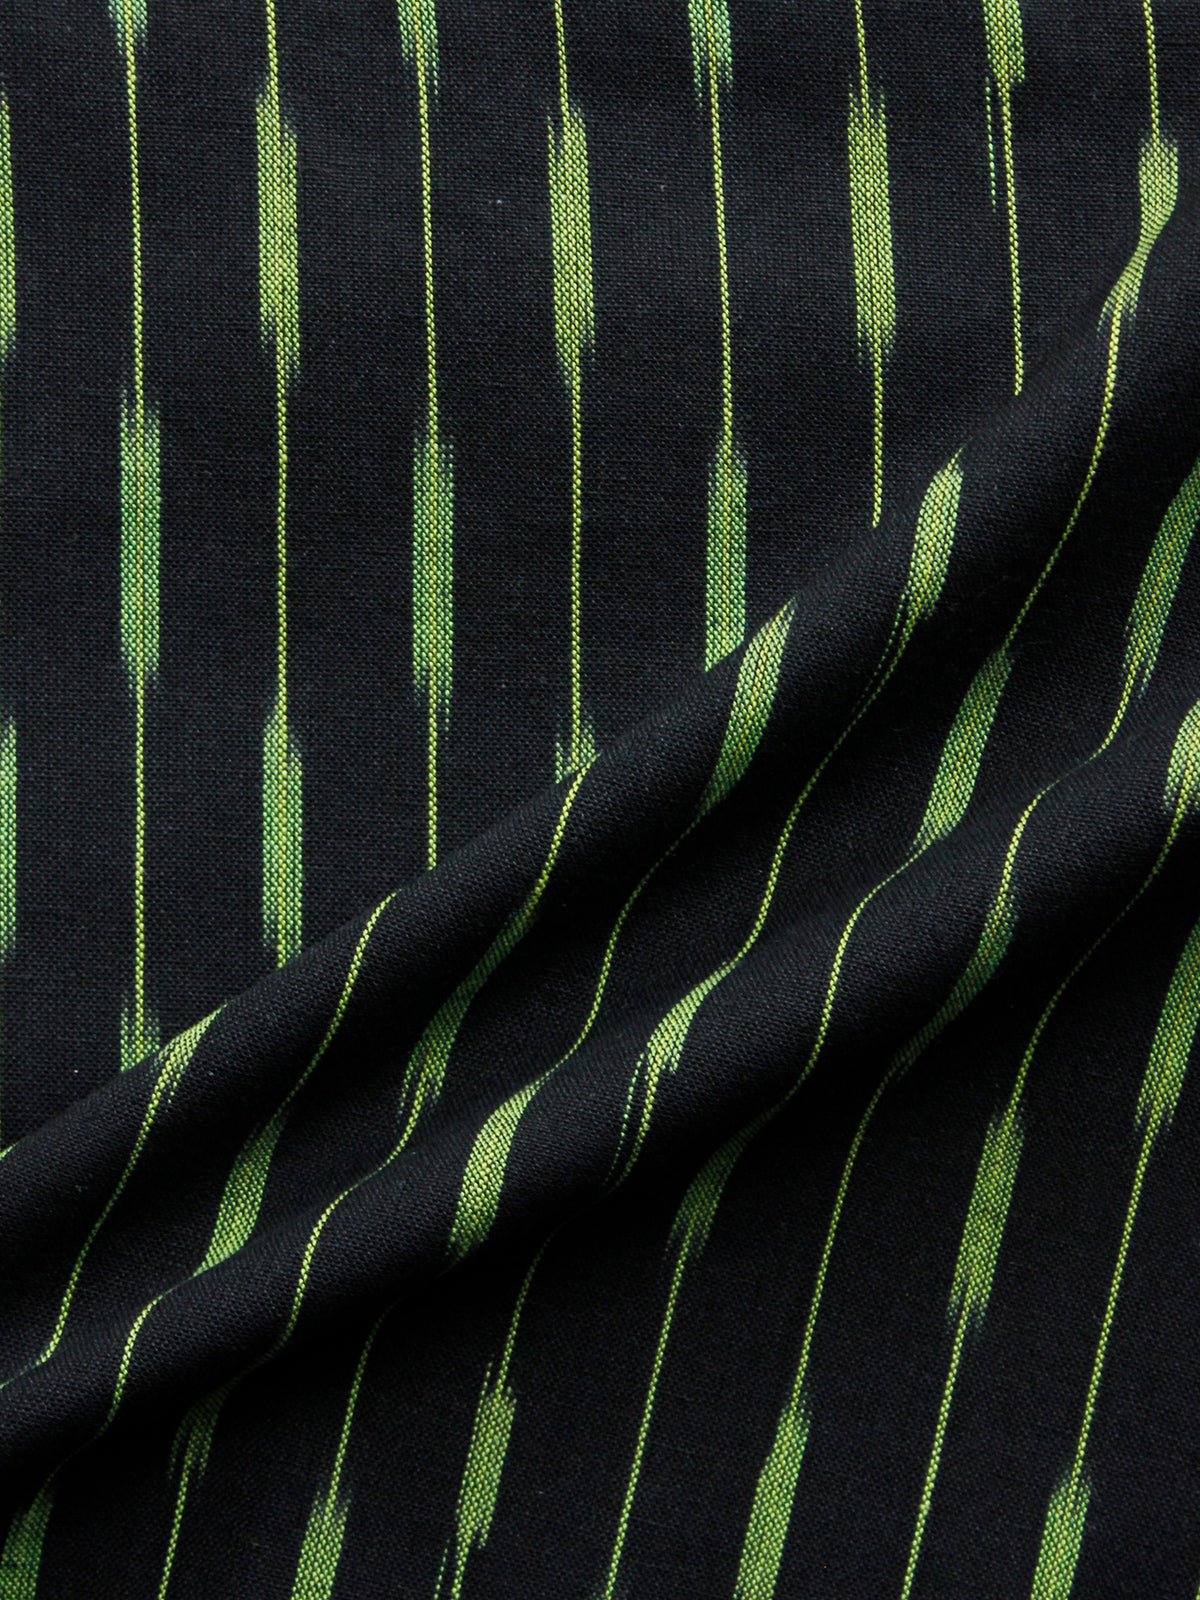 Black Green Pochampally Hand Woven Ikat Cotton Fabric Per Meter - F002F1445